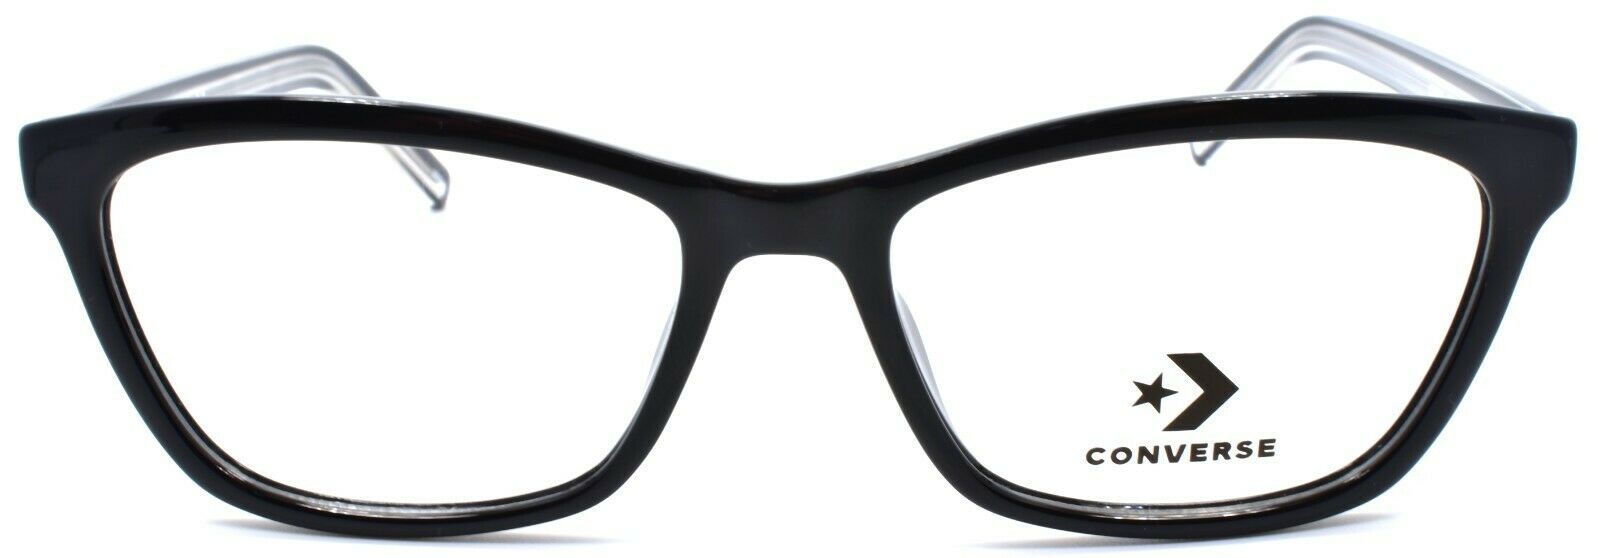 2-CONVERSE CV5014 001 Women's Eyeglasses Frames Cat Eye 53-16-140 Black-886895511292-IKSpecs